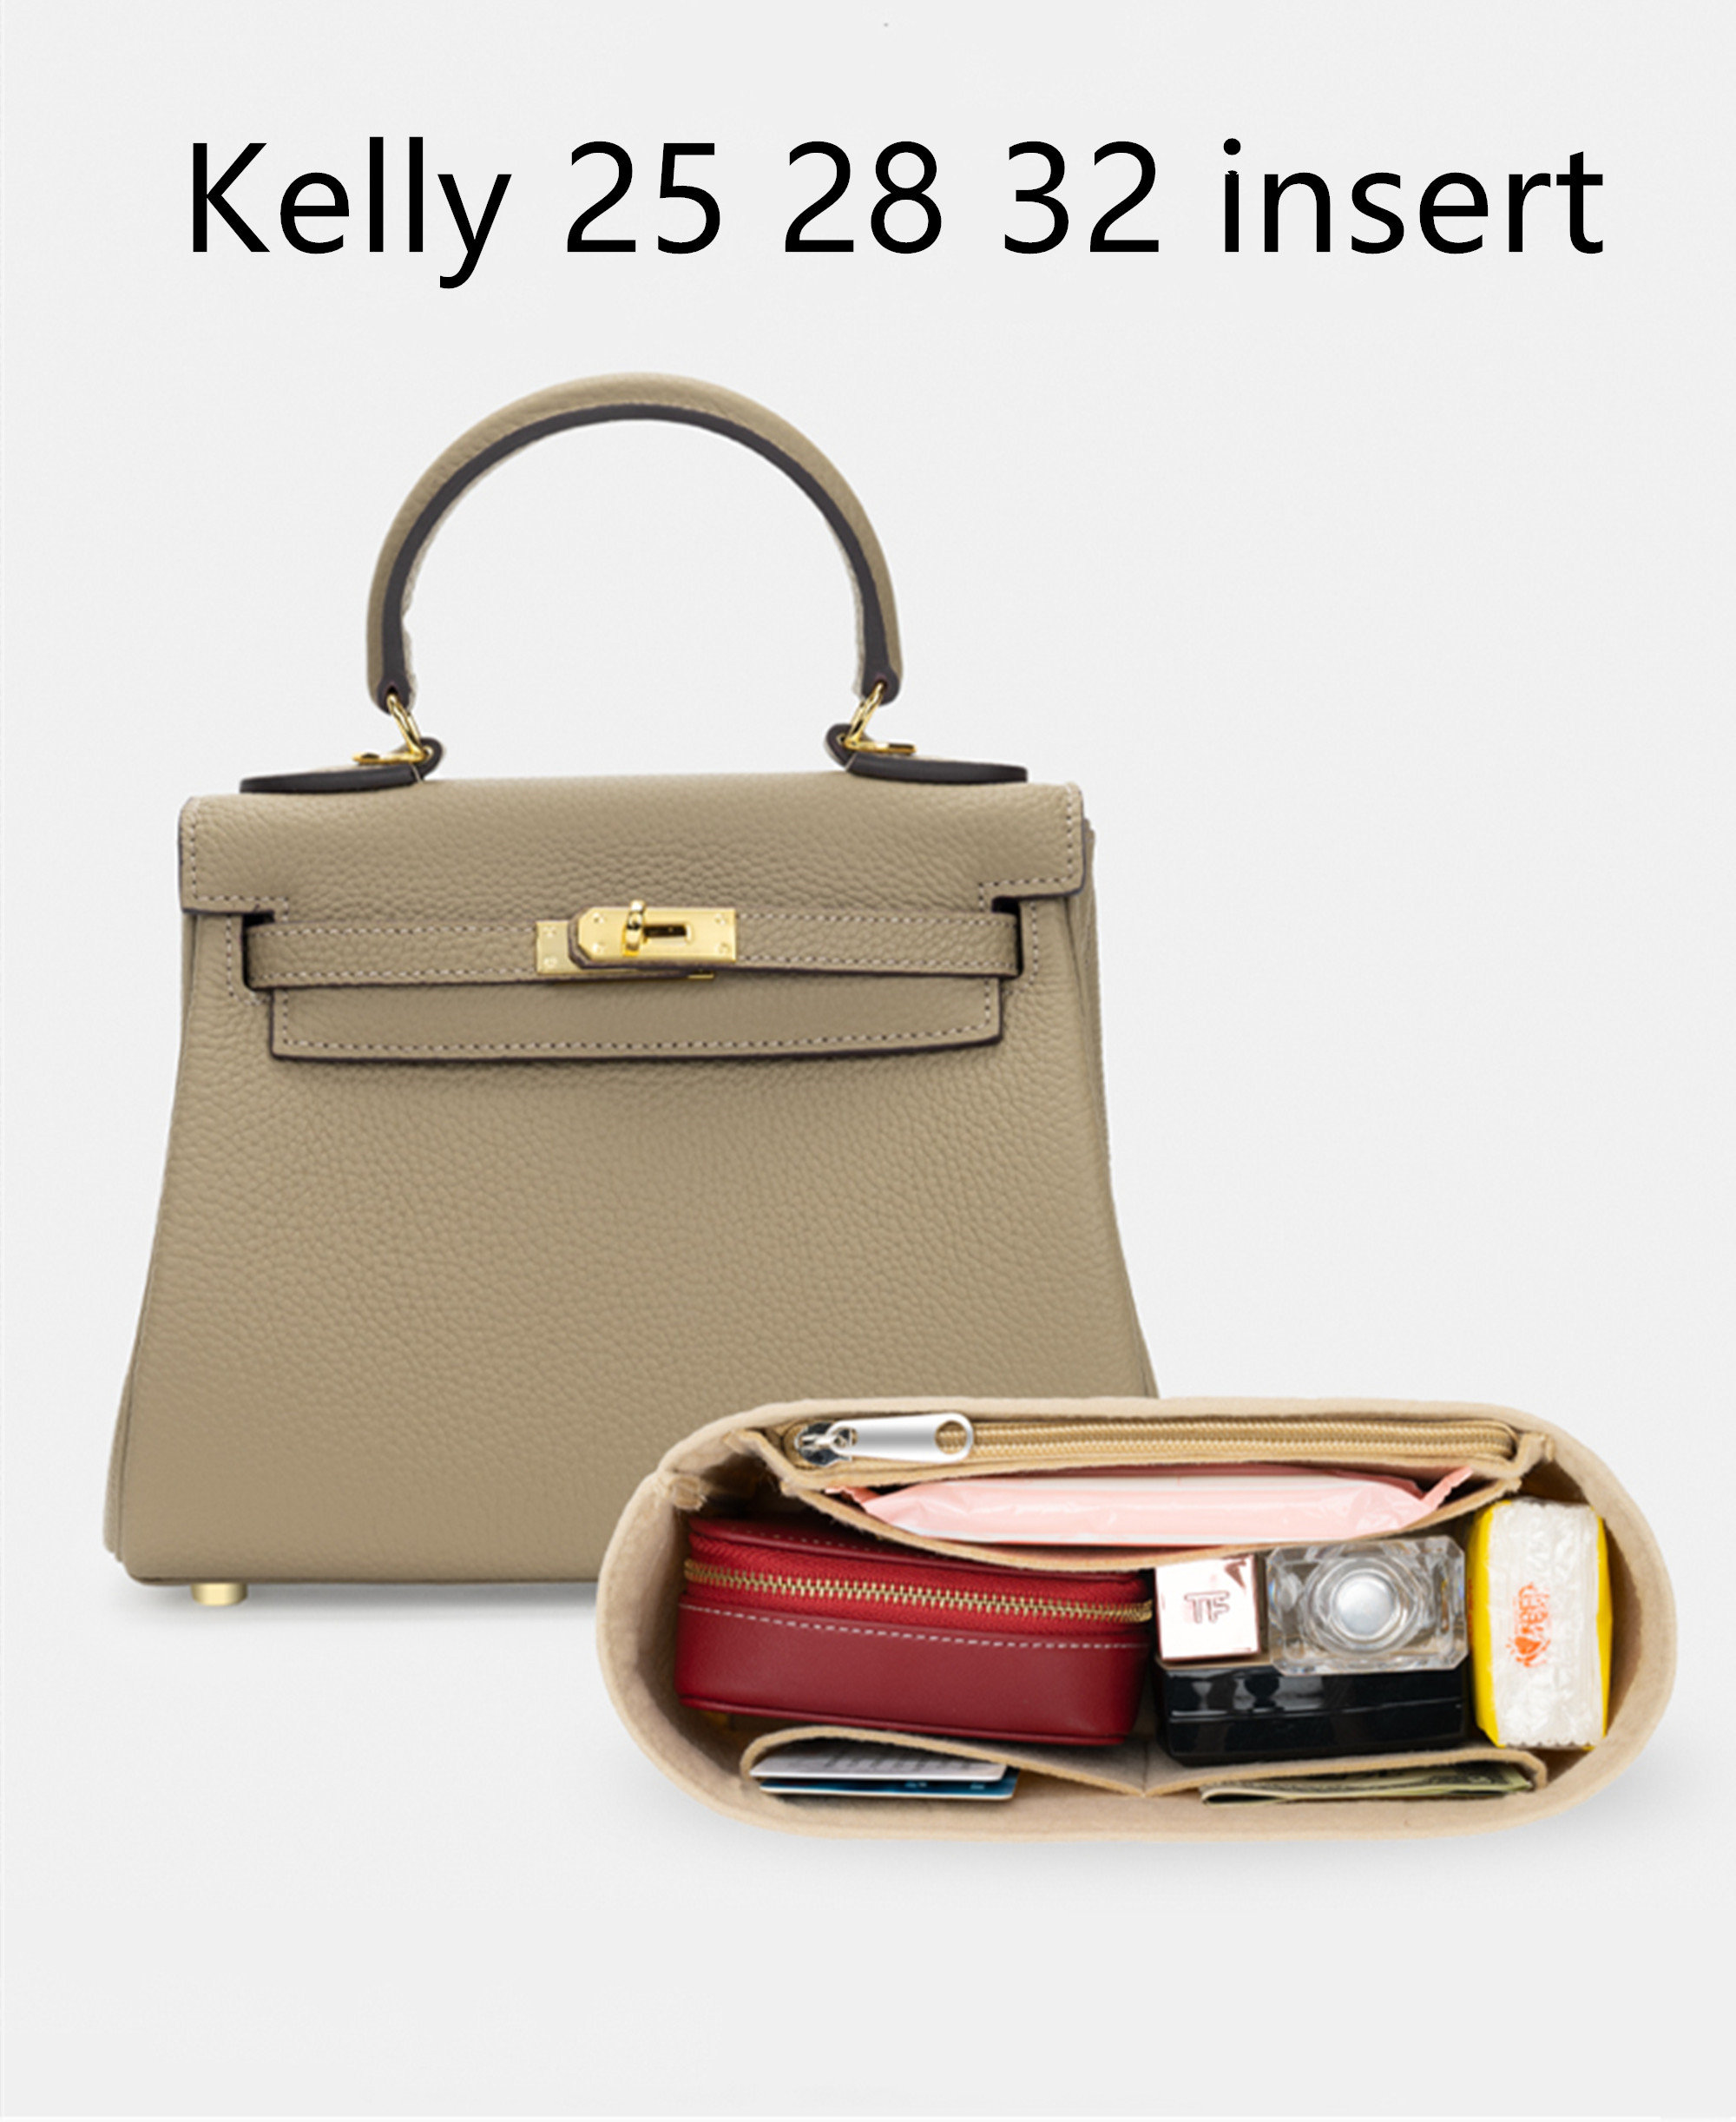  Lckaey for Handbags hermes Kelly 32 organizer Purse Organizer  insert1011Beige-L : Clothing, Shoes & Jewelry